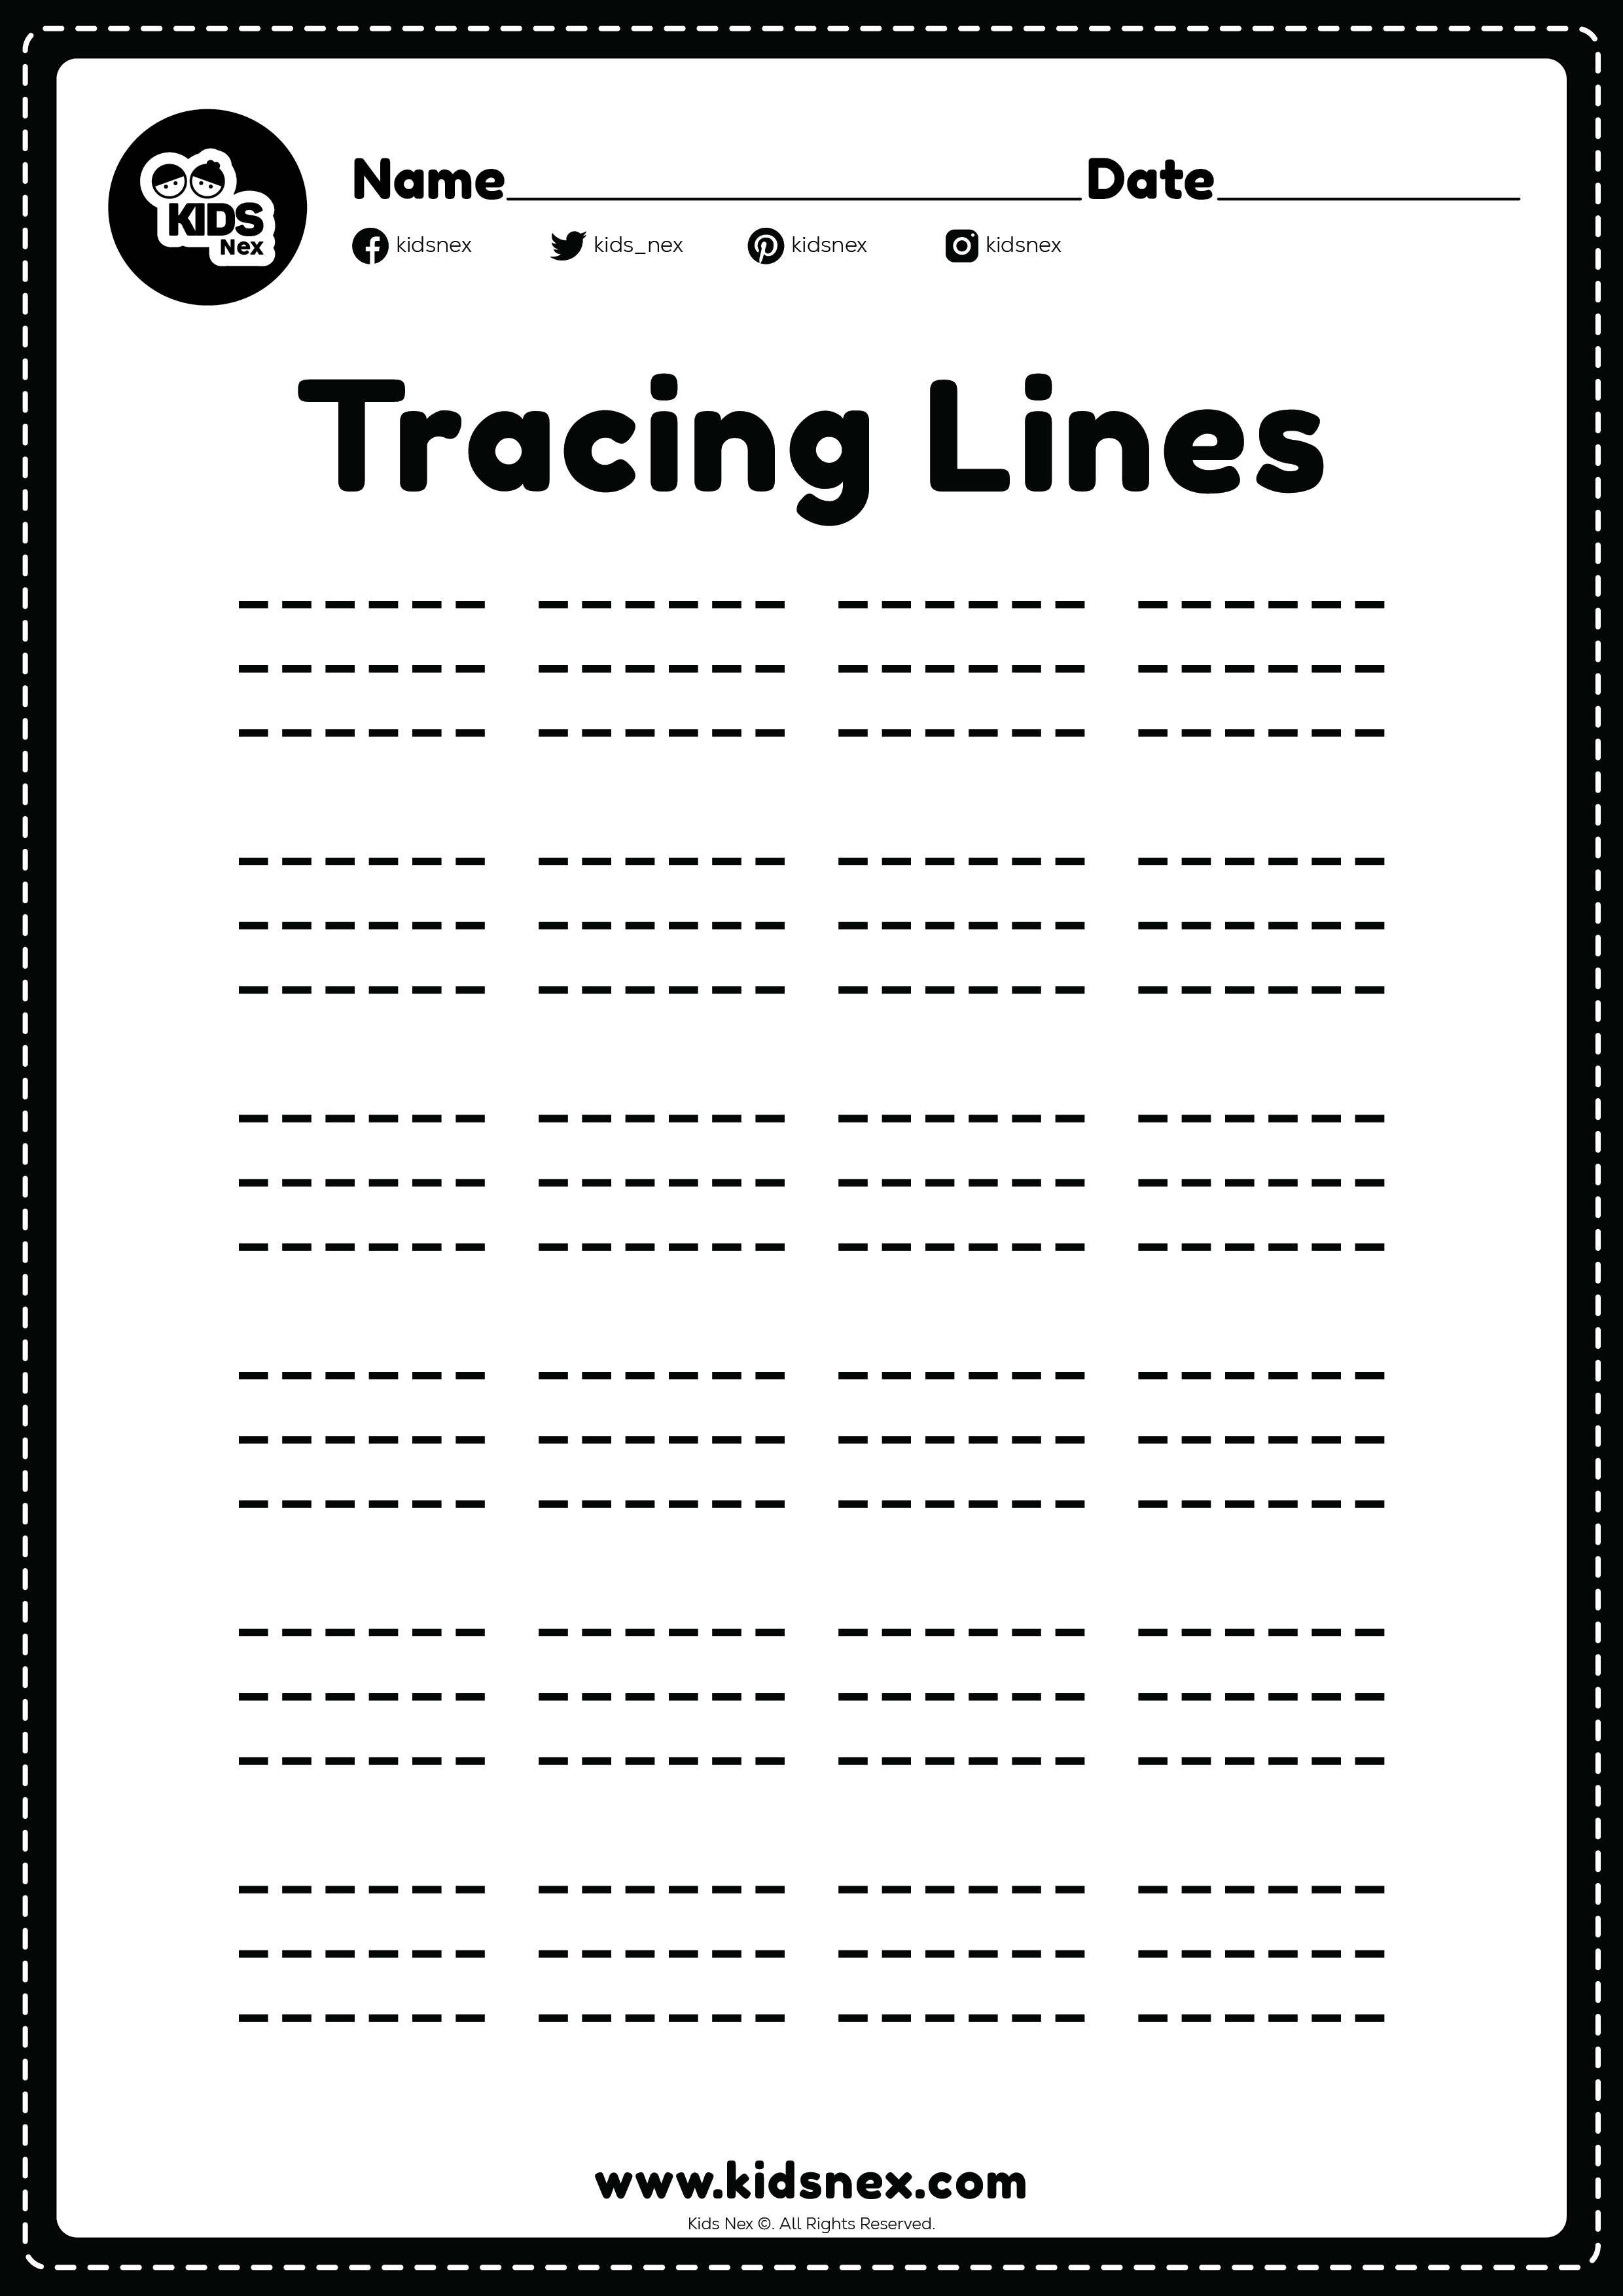 Sleeping line worksheet tracing practice for kindergarten and preschoolers kids for educational activities in a free printable page.